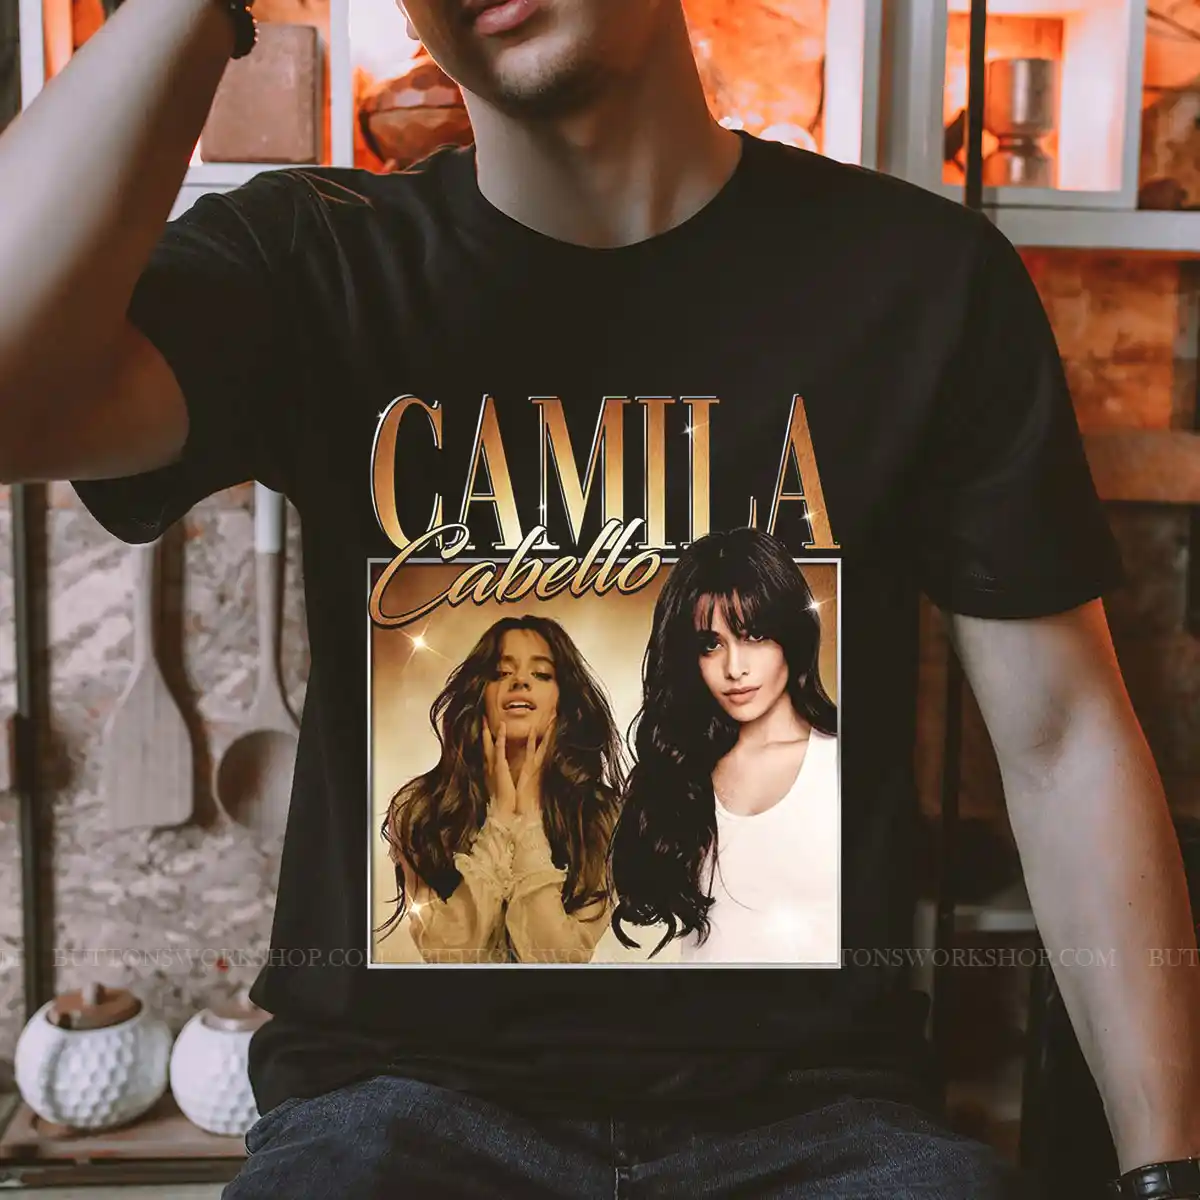 Camila Cabello Shirt Hot Topic Unisex Tshirt